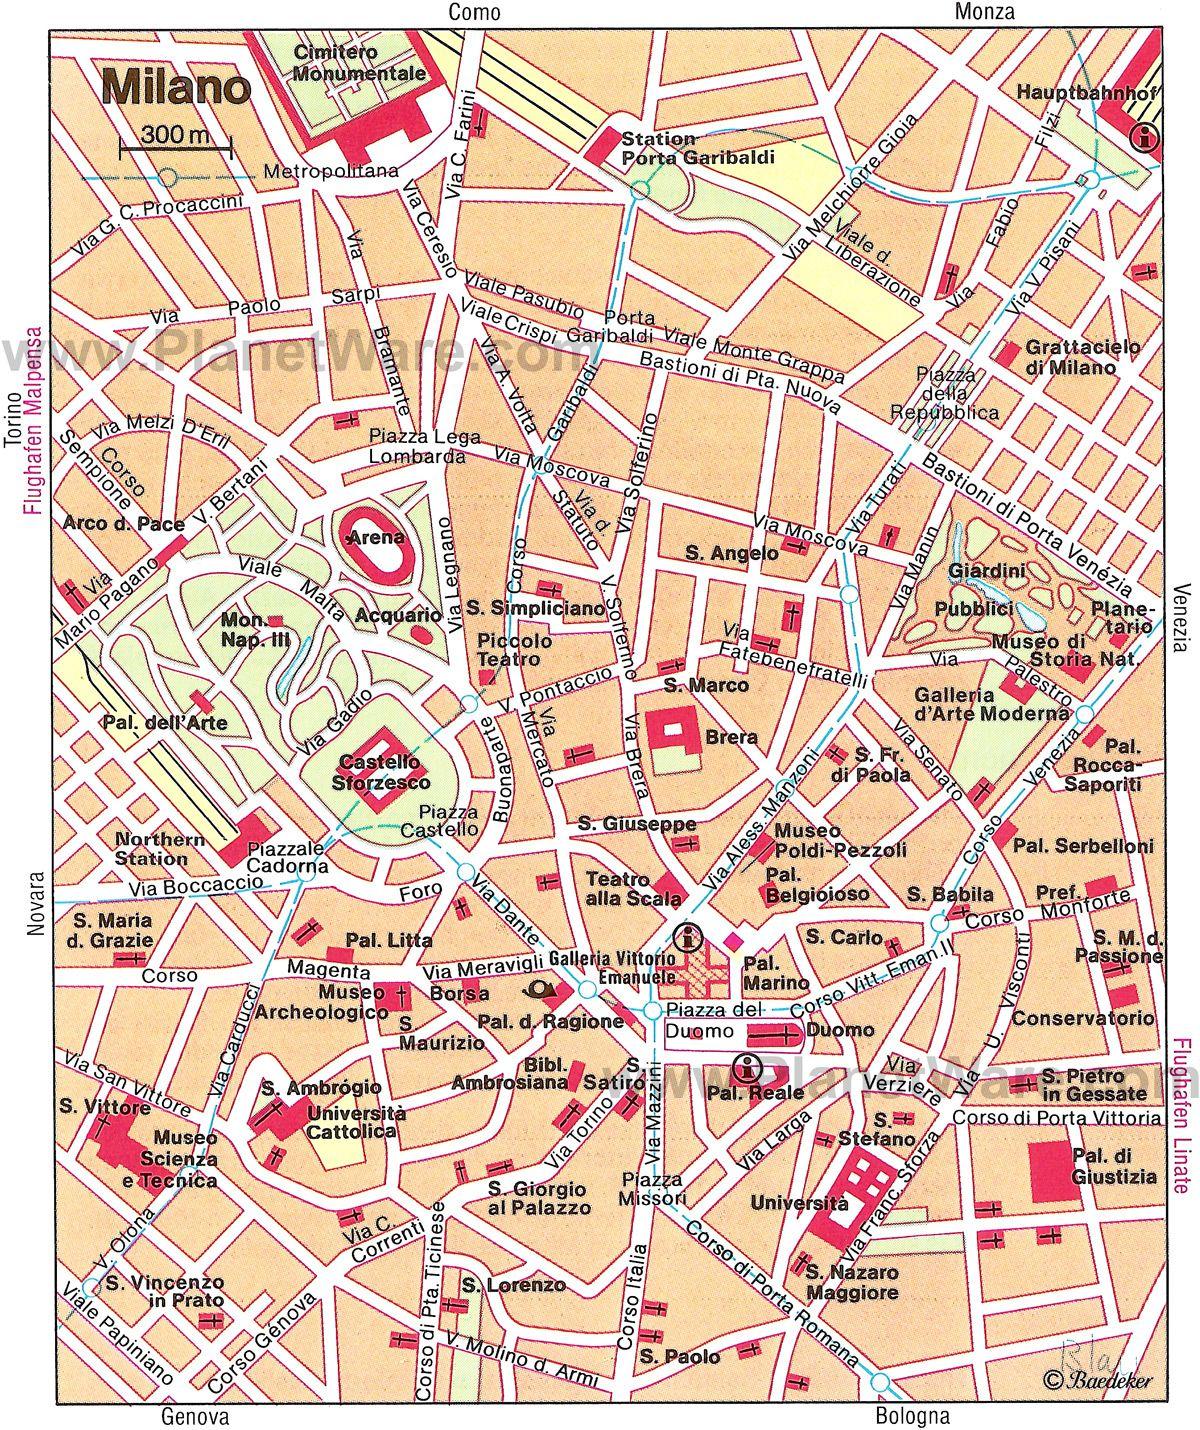 Turistička karta Milano - Milano-Italija turistička karta (Lombardija